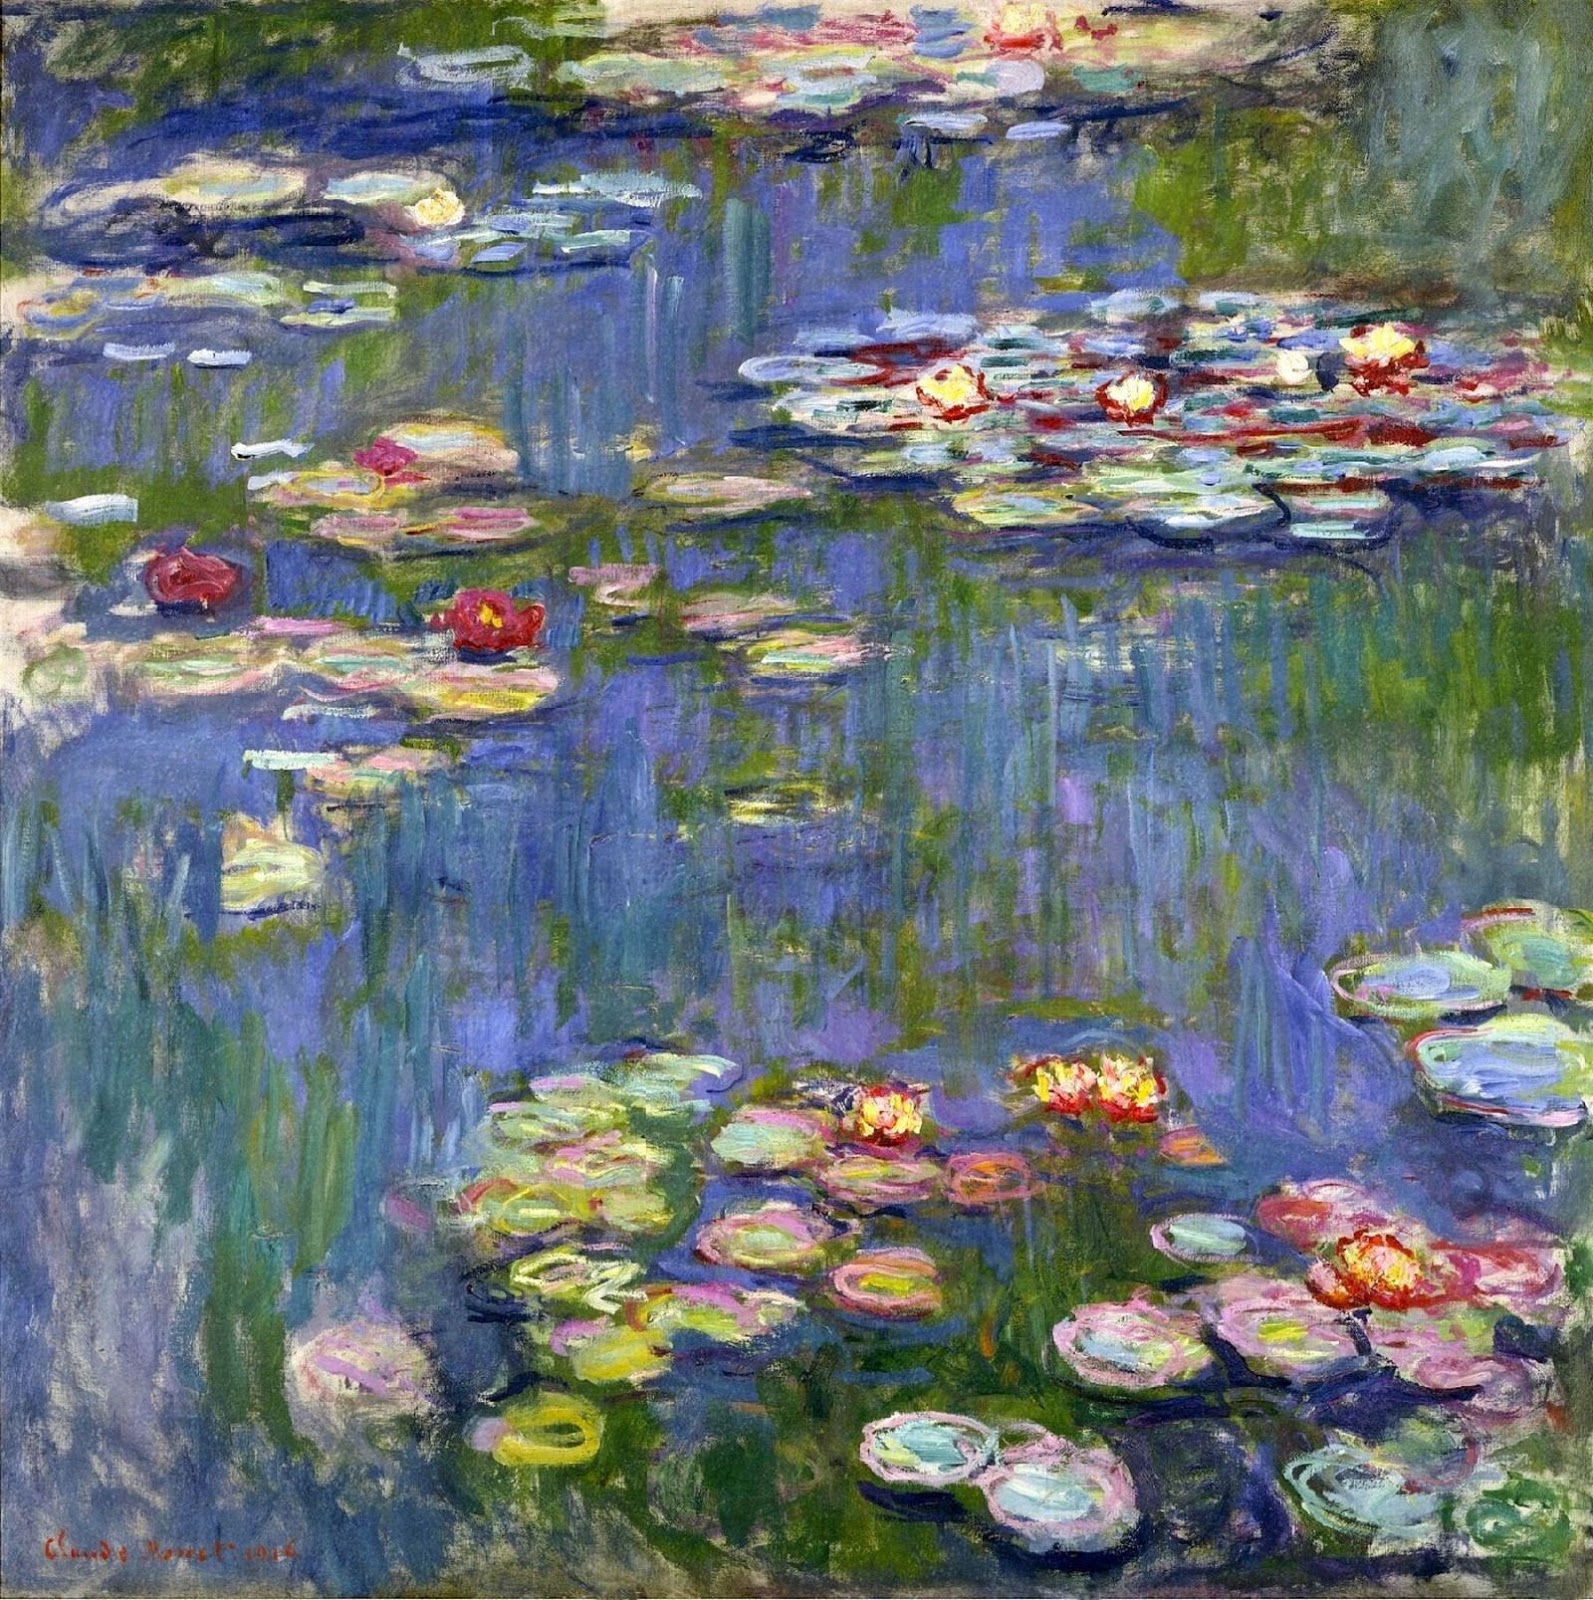 Claude+Monet-1840-1926 (960).jpg